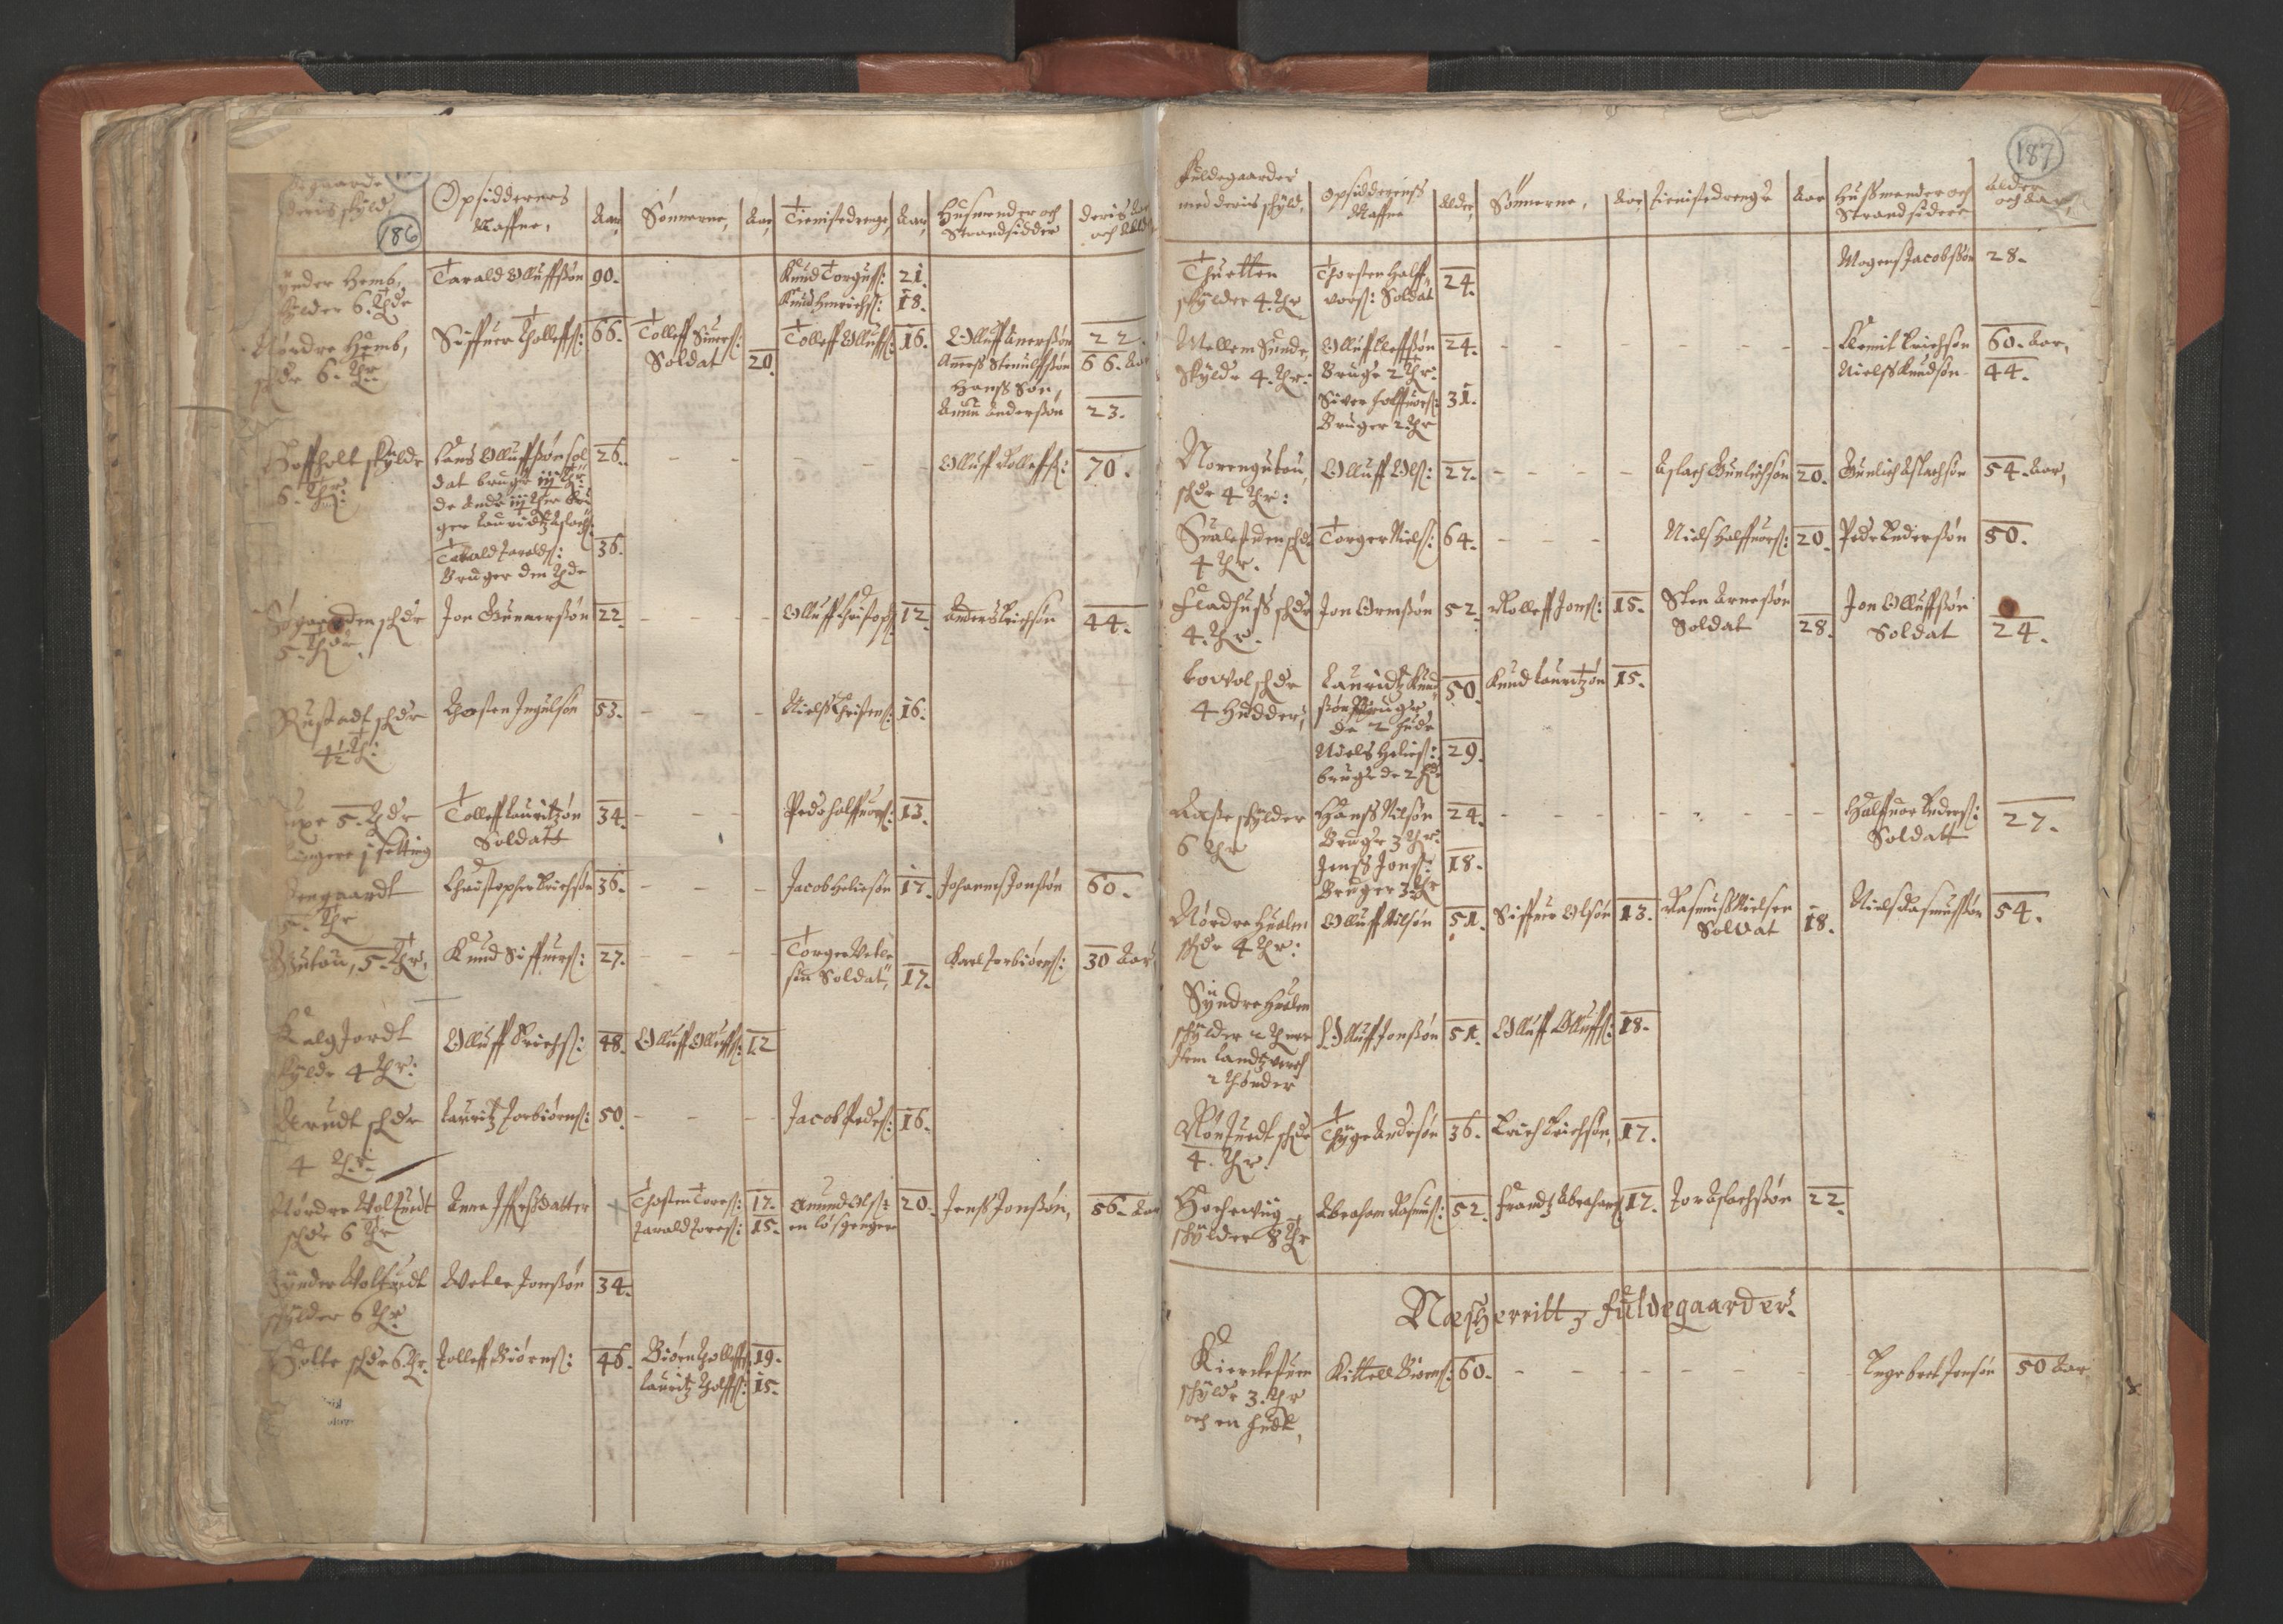 RA, Vicar's Census 1664-1666, no. 12: Øvre Telemark deanery, Nedre Telemark deanery and Bamble deanery, 1664-1666, p. 186-187